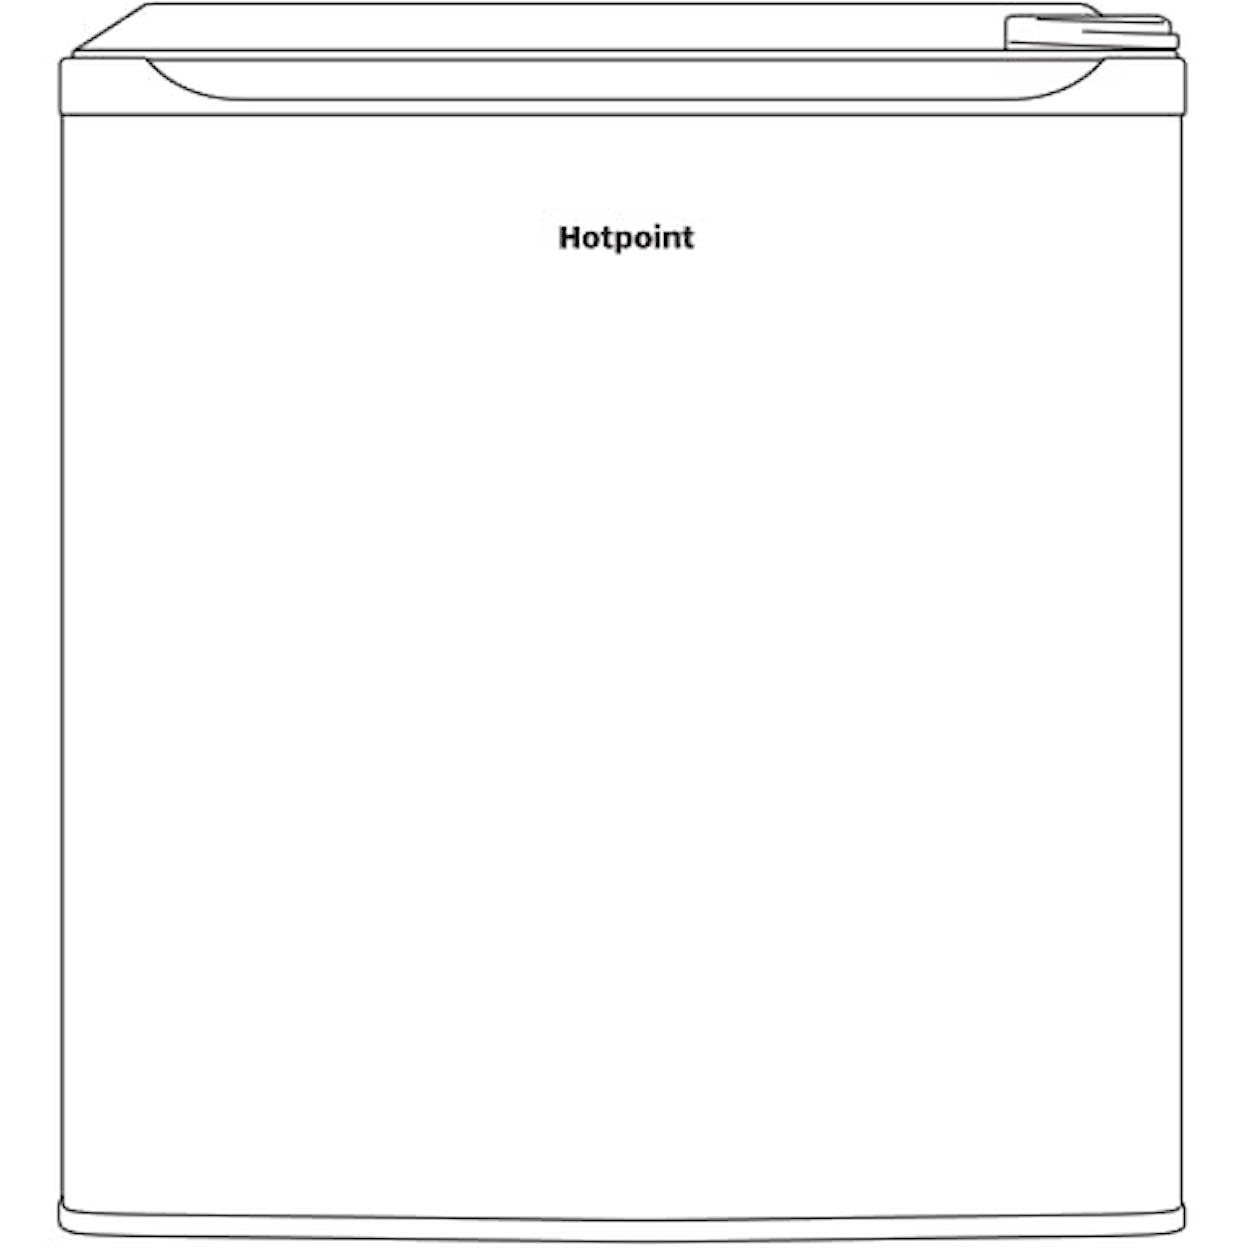 Hotpoint Refrigerators Compact Refrigerator